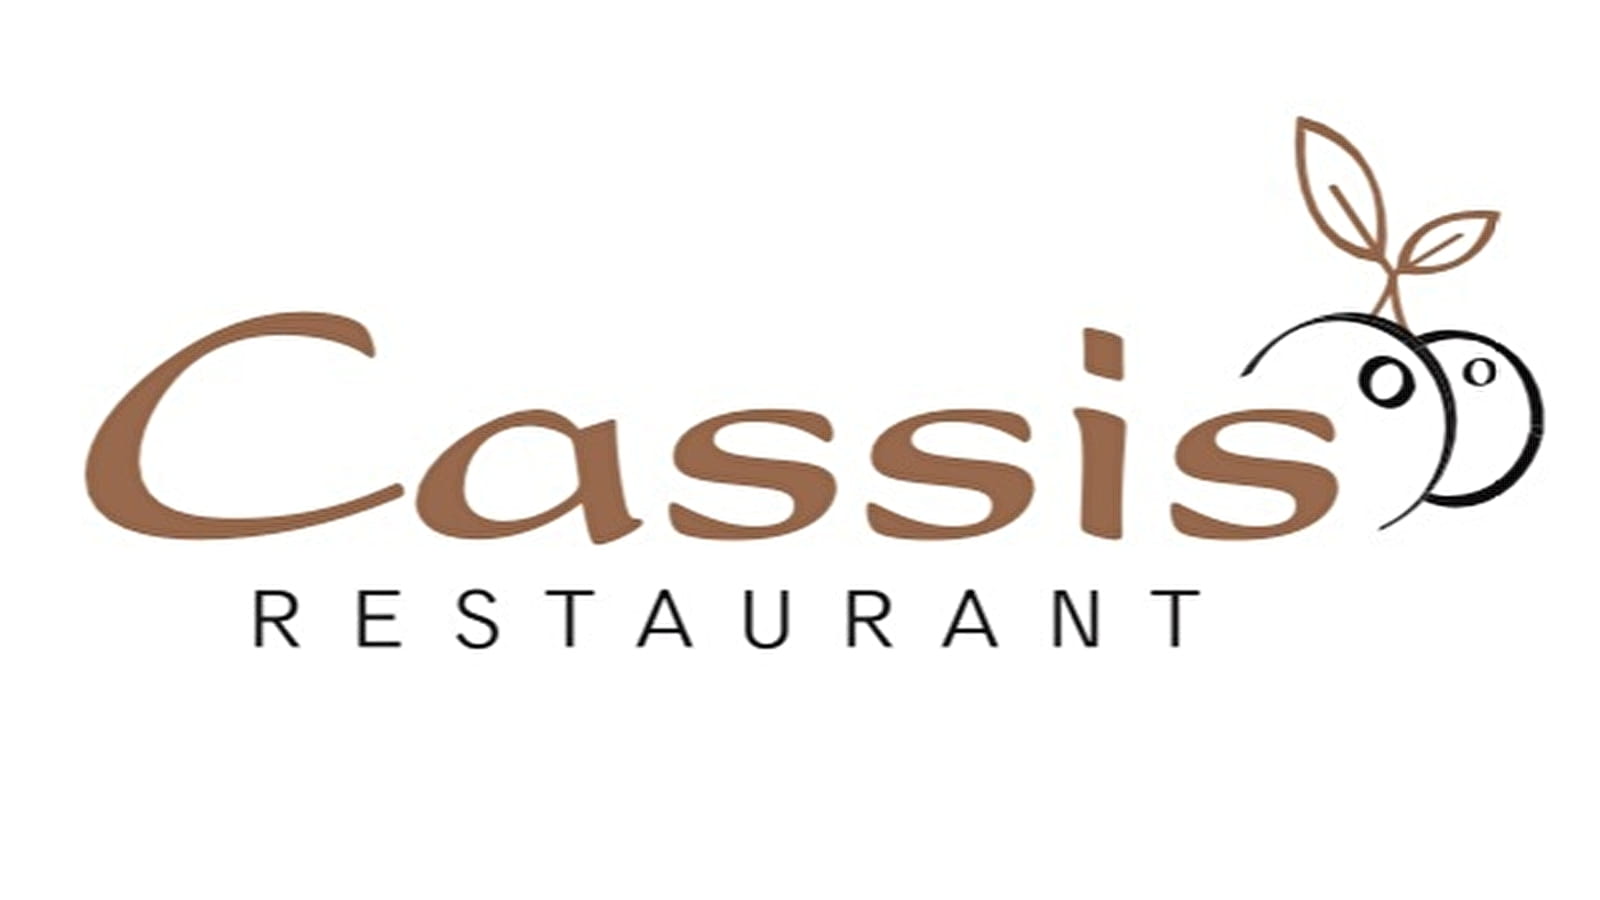 Cassis Restaurant